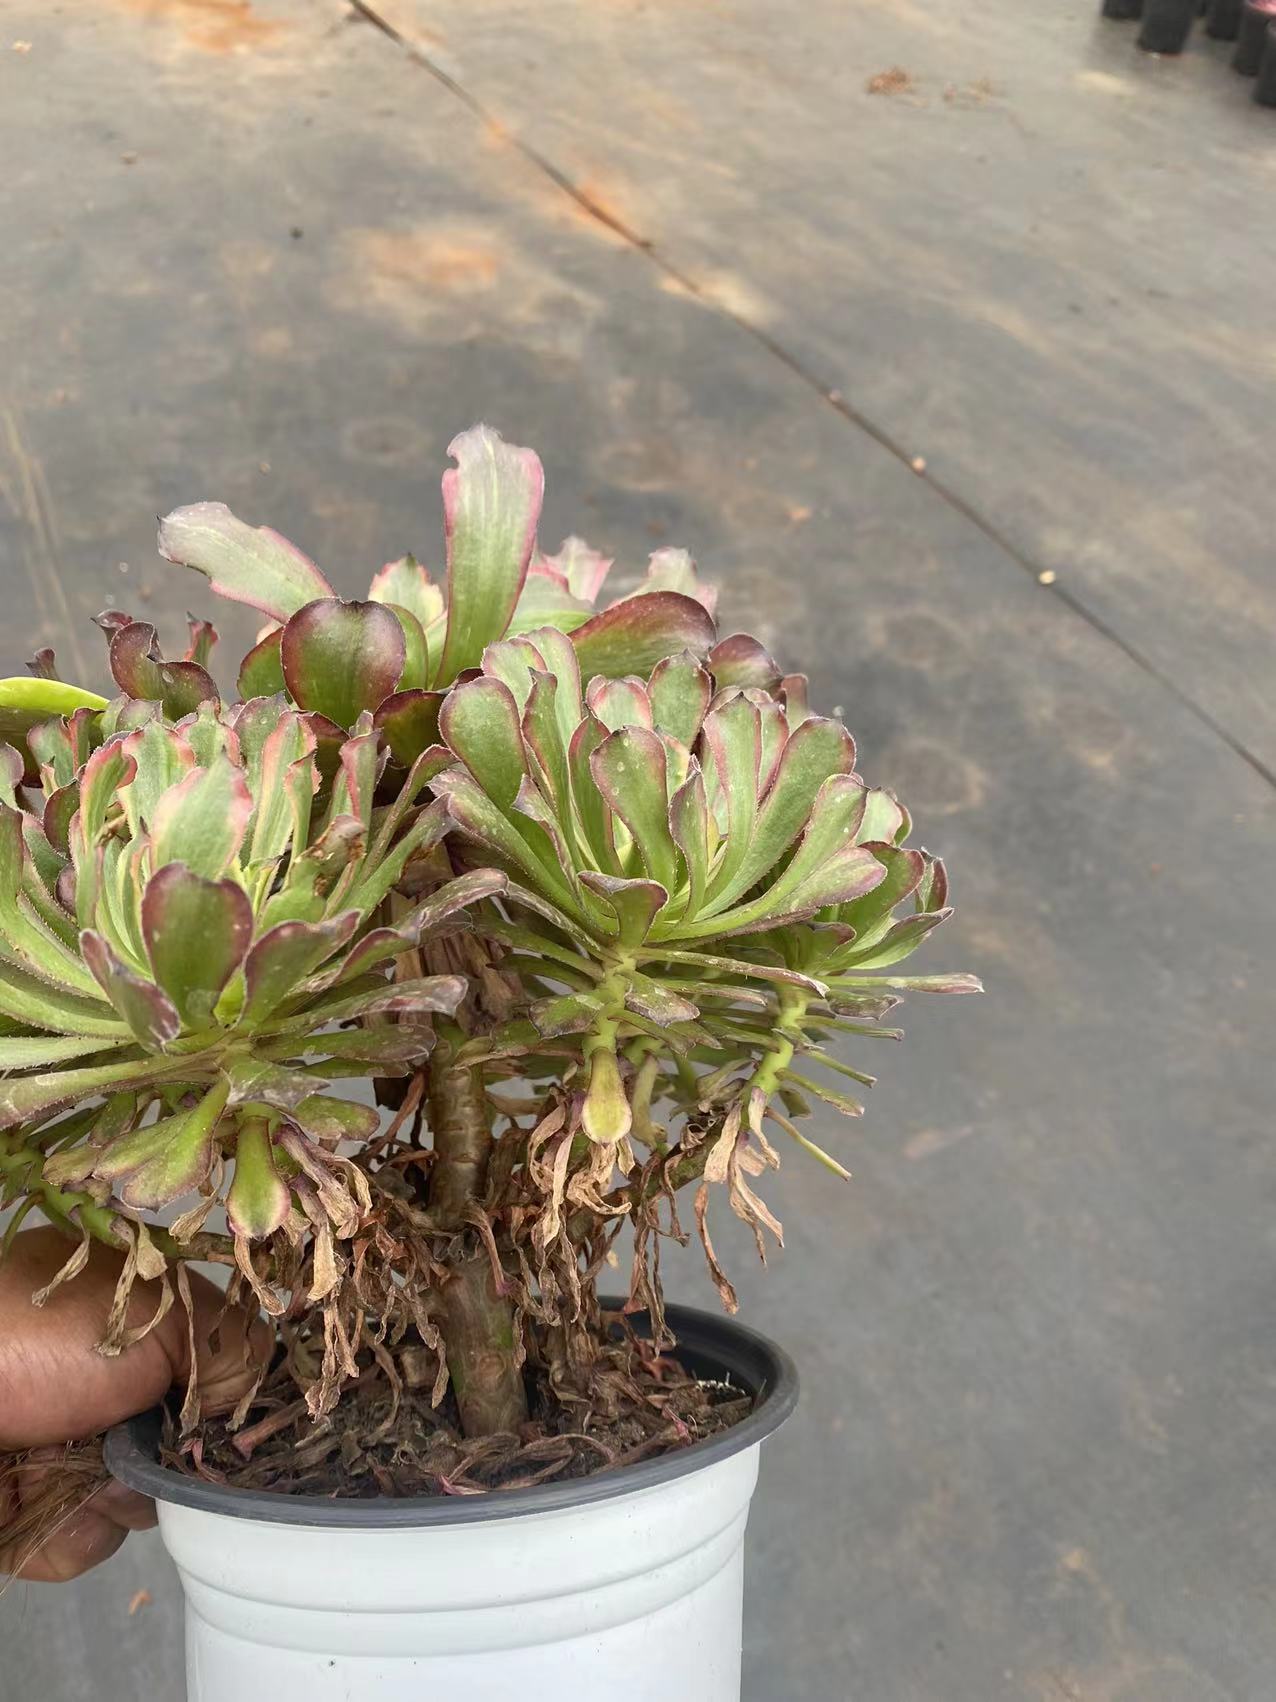 Fendai cluster20-25cm/ 8-15 heads/ Aeonium cluster/ Variegated Natural Live Plants Succulents